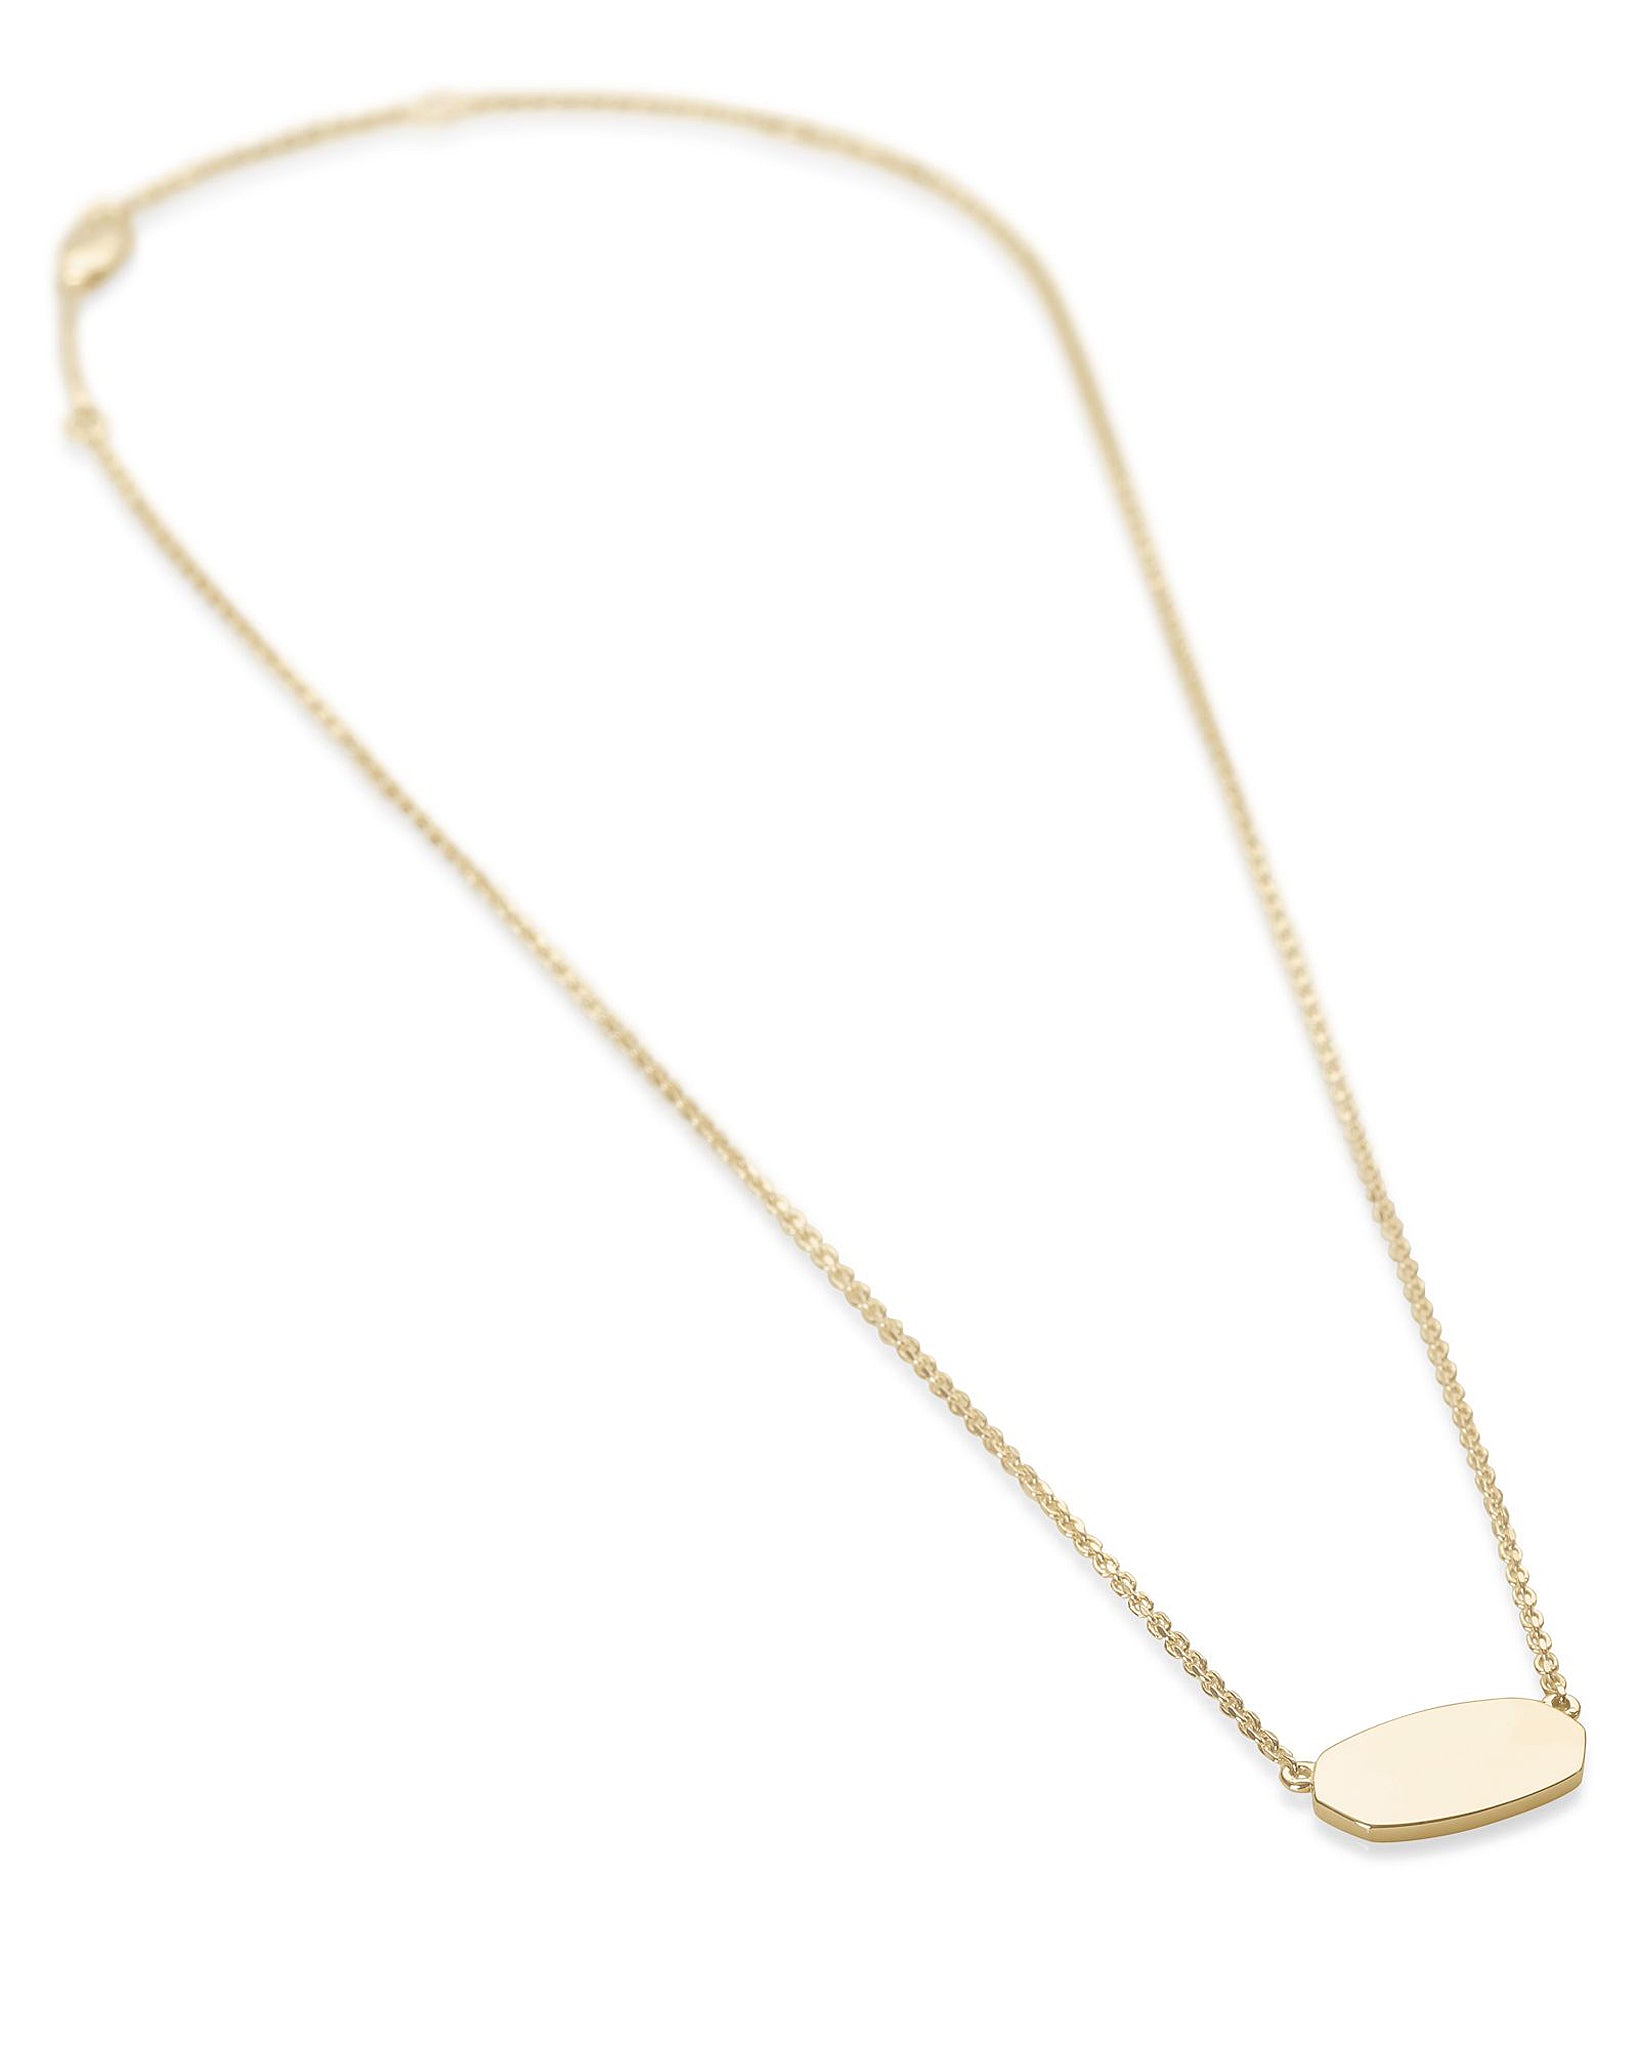 Kendra Scott Elisa Oval Pendant Necklace in 18k Gold Vermeil